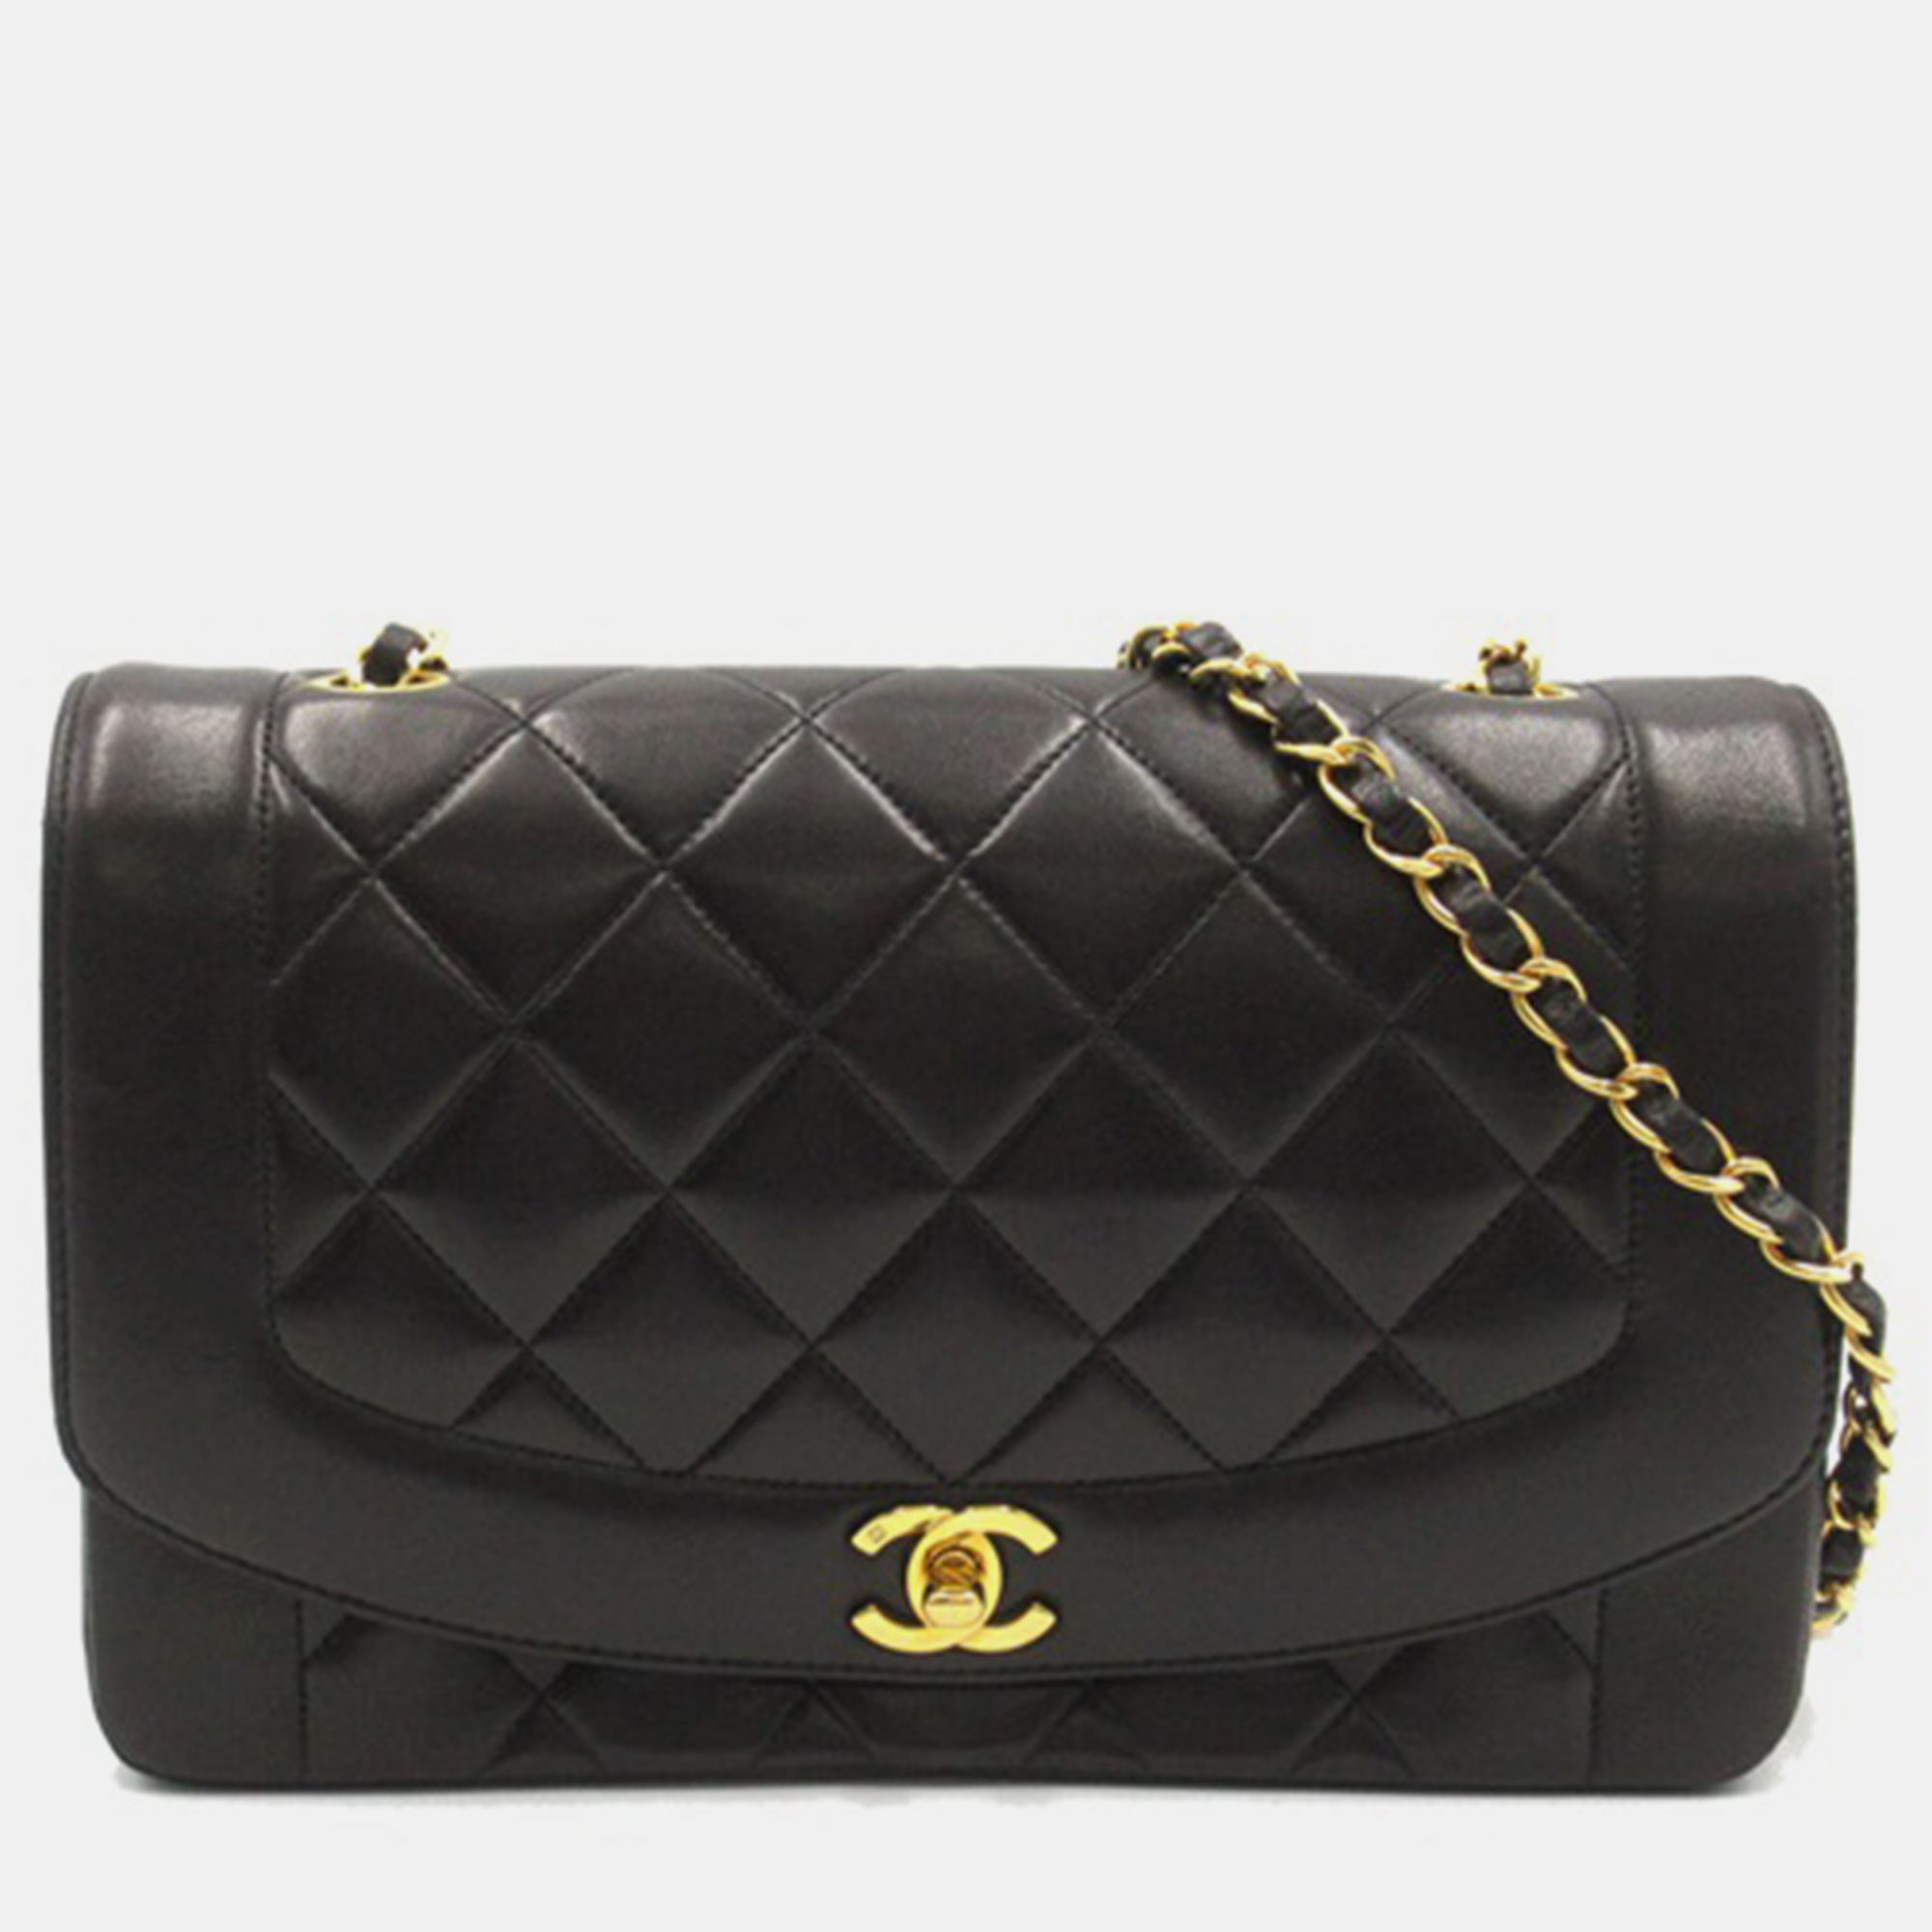 Chanel black leather diana flap crossbody bag